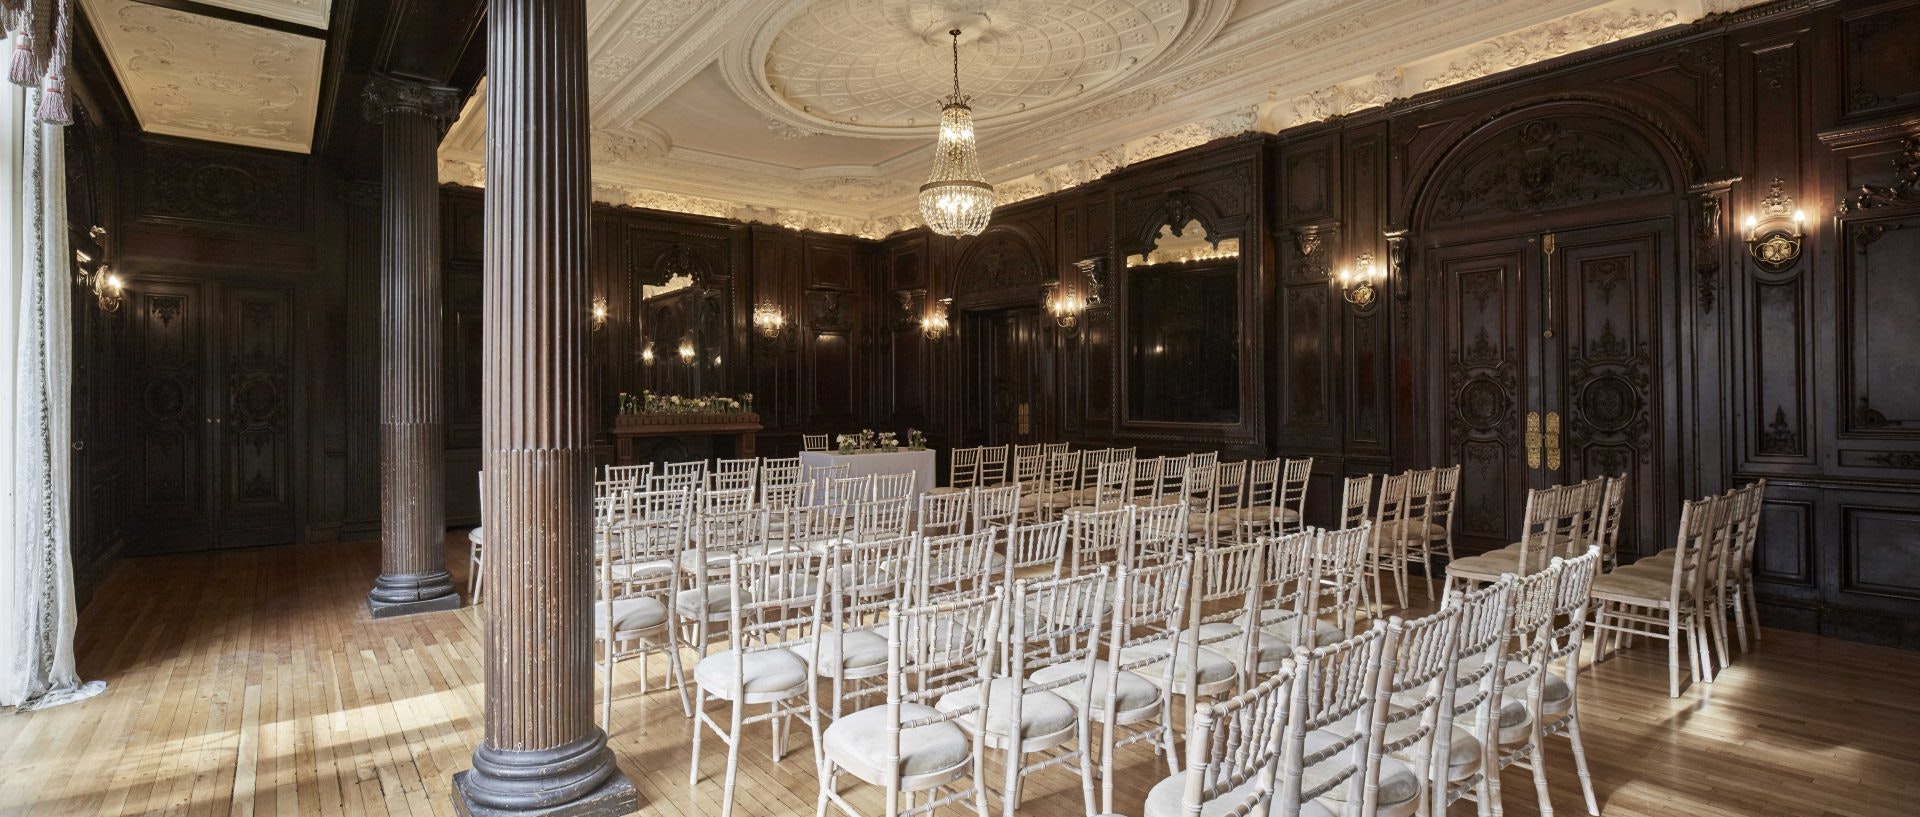 Wedding Ceremonie Venues in London - Dartmouth House